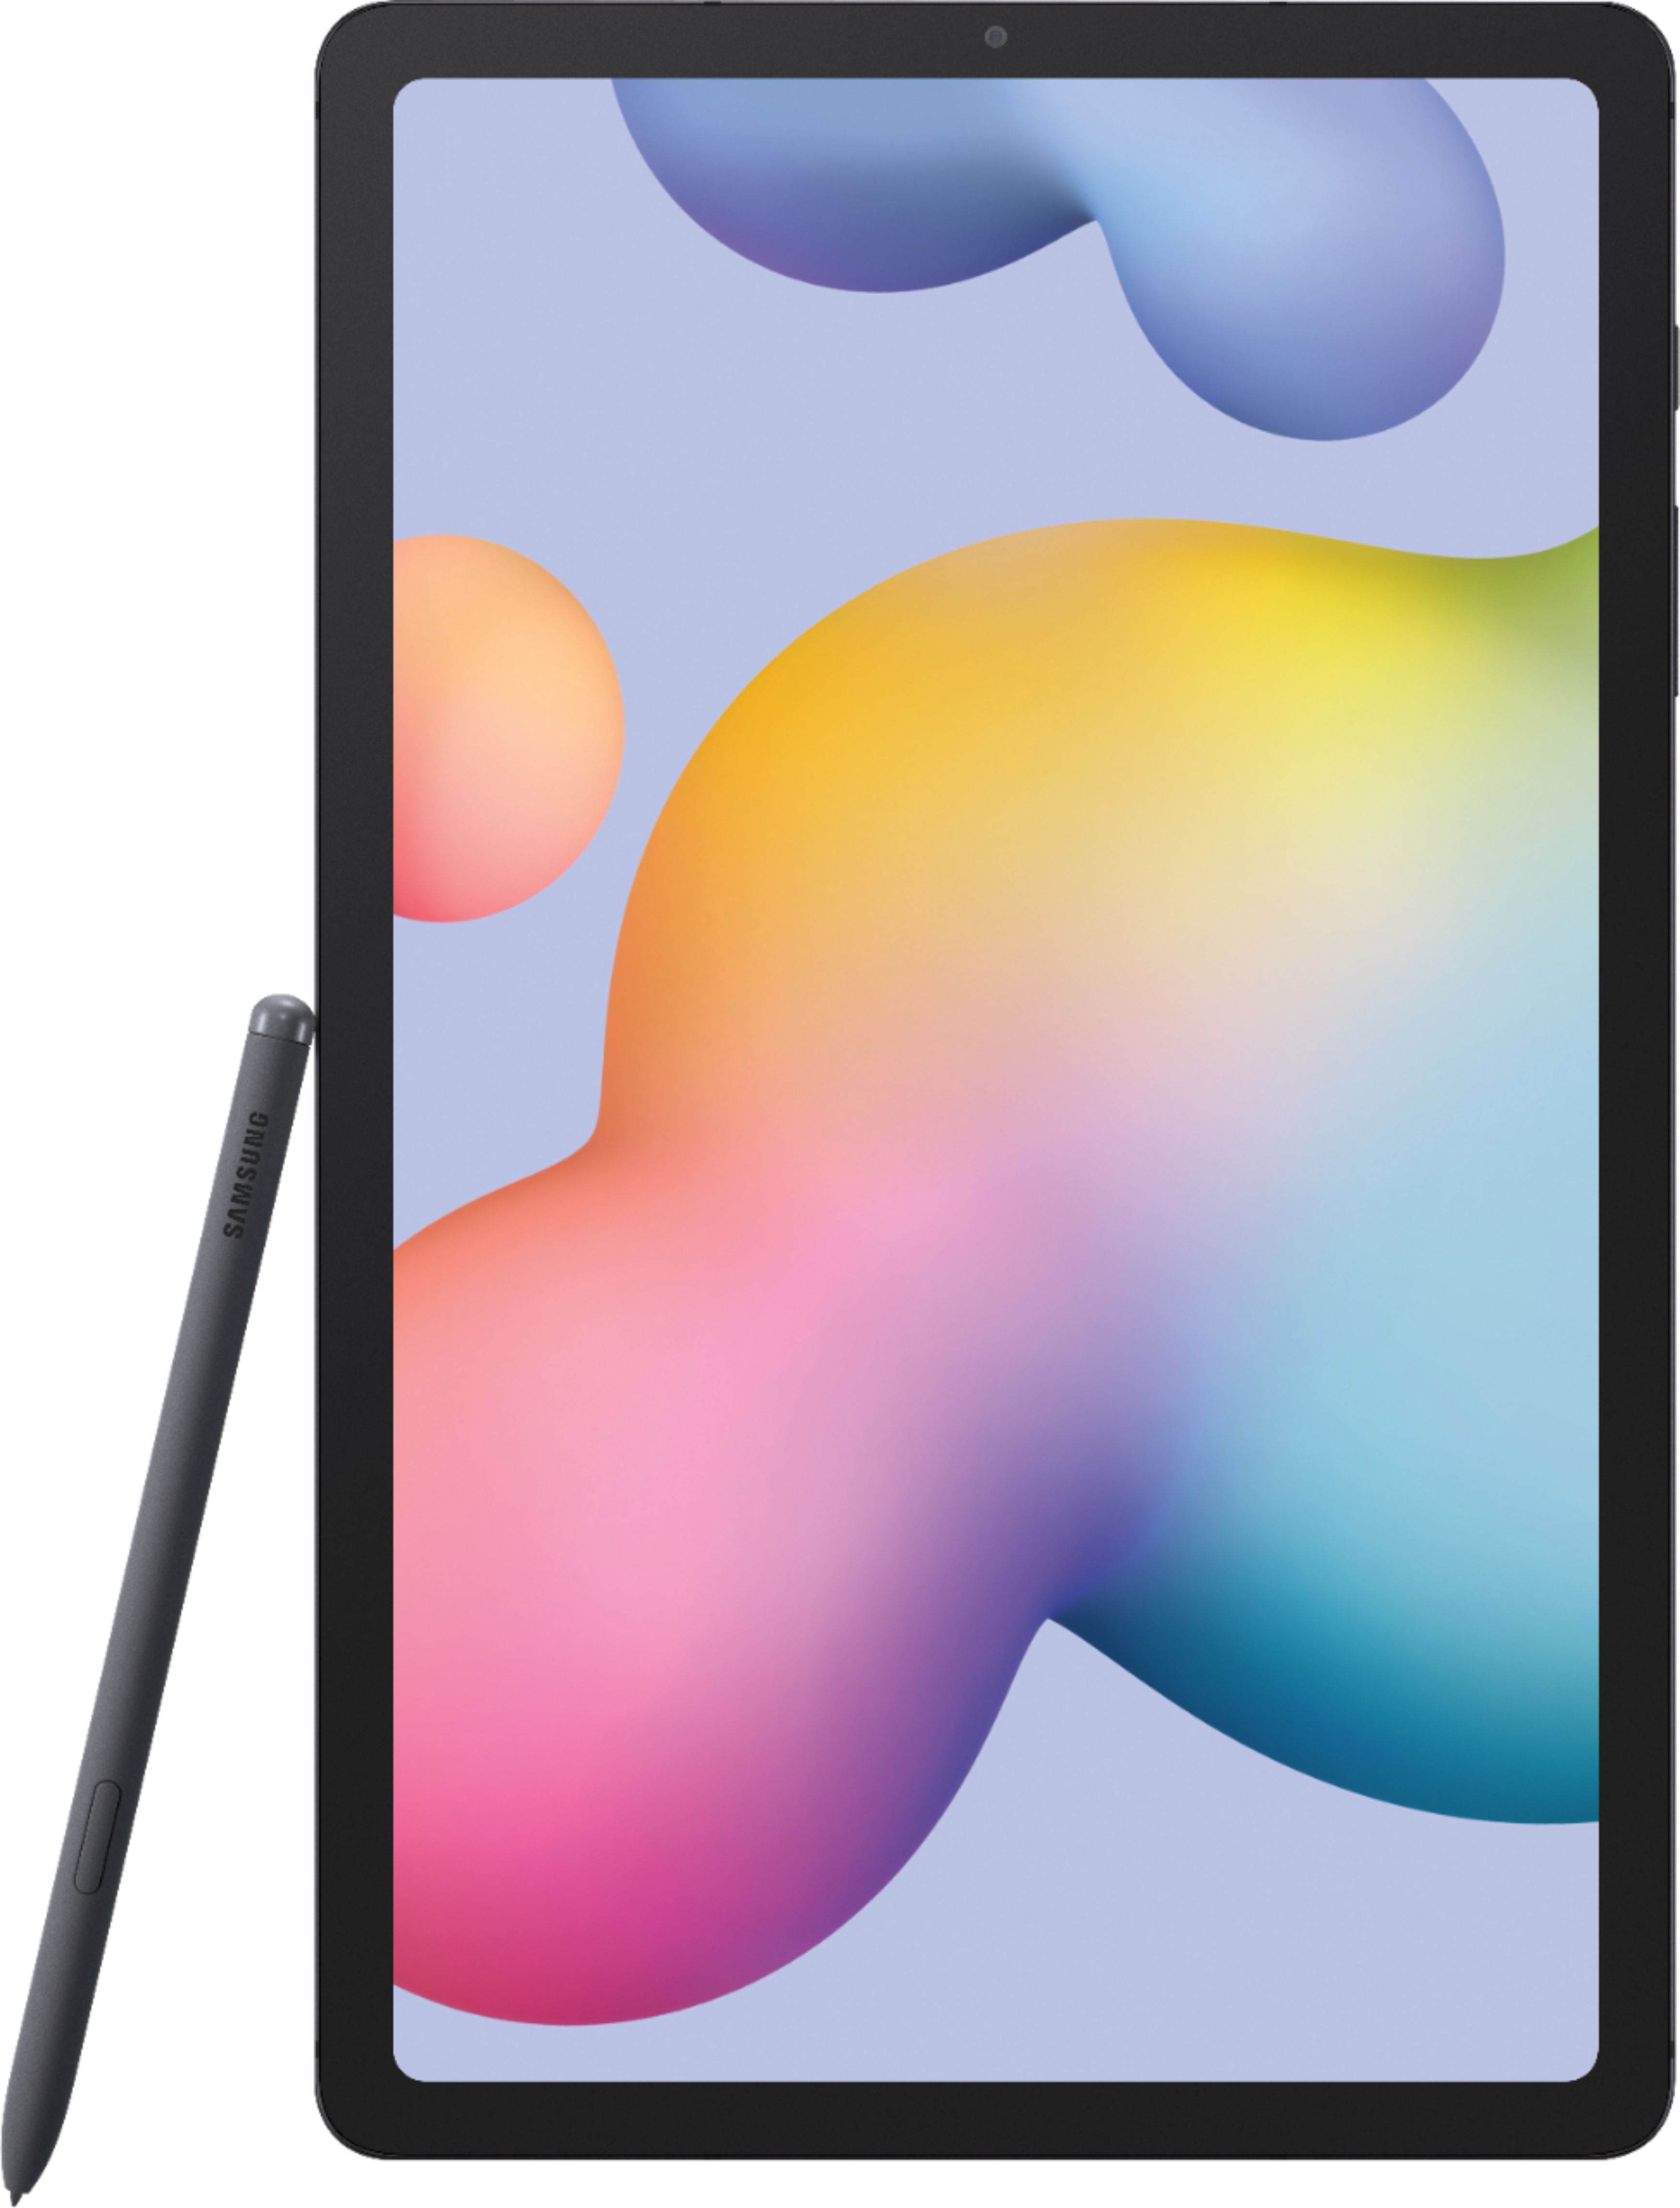 Samsung Galaxy Tab S6 10.4" 128GB Oxford Gray SM-P610NZAEXAR - Best Buy